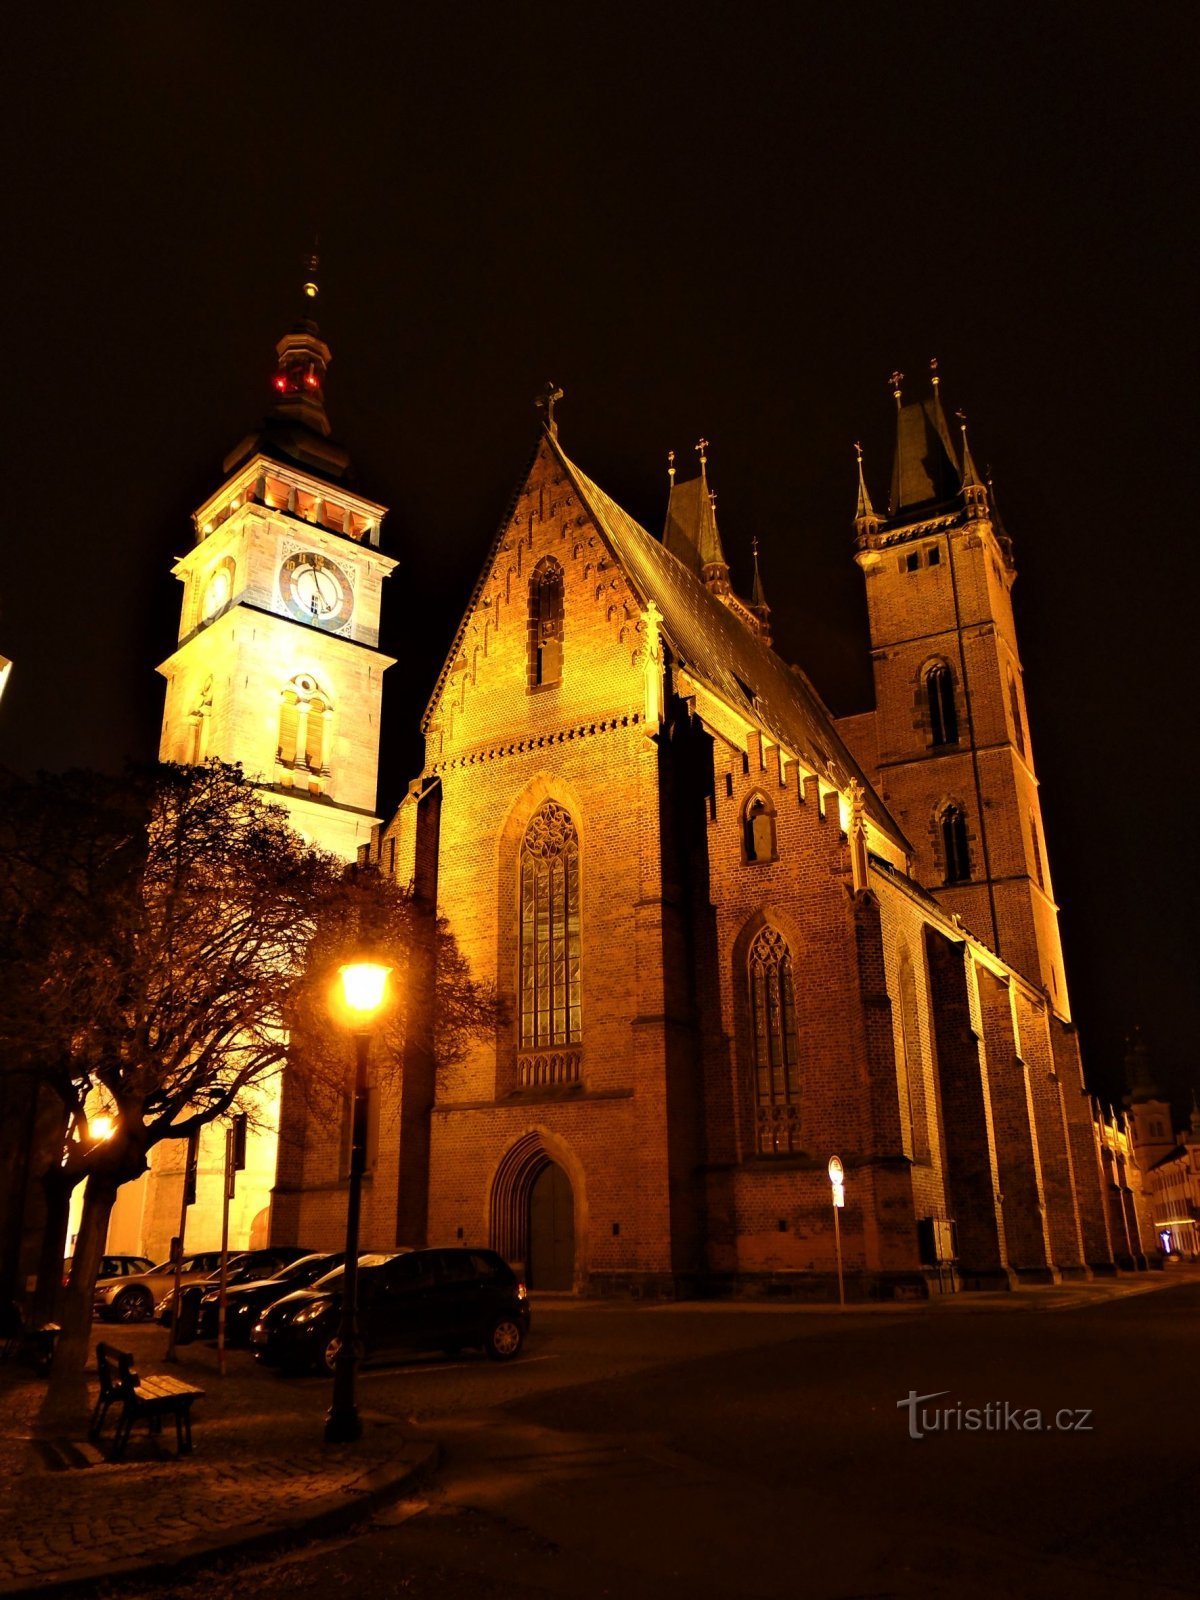 La Torre Bianca e la Cattedrale di S. Spirito (Hradec Králové, 13.12.2020/XNUMX/XNUMX)